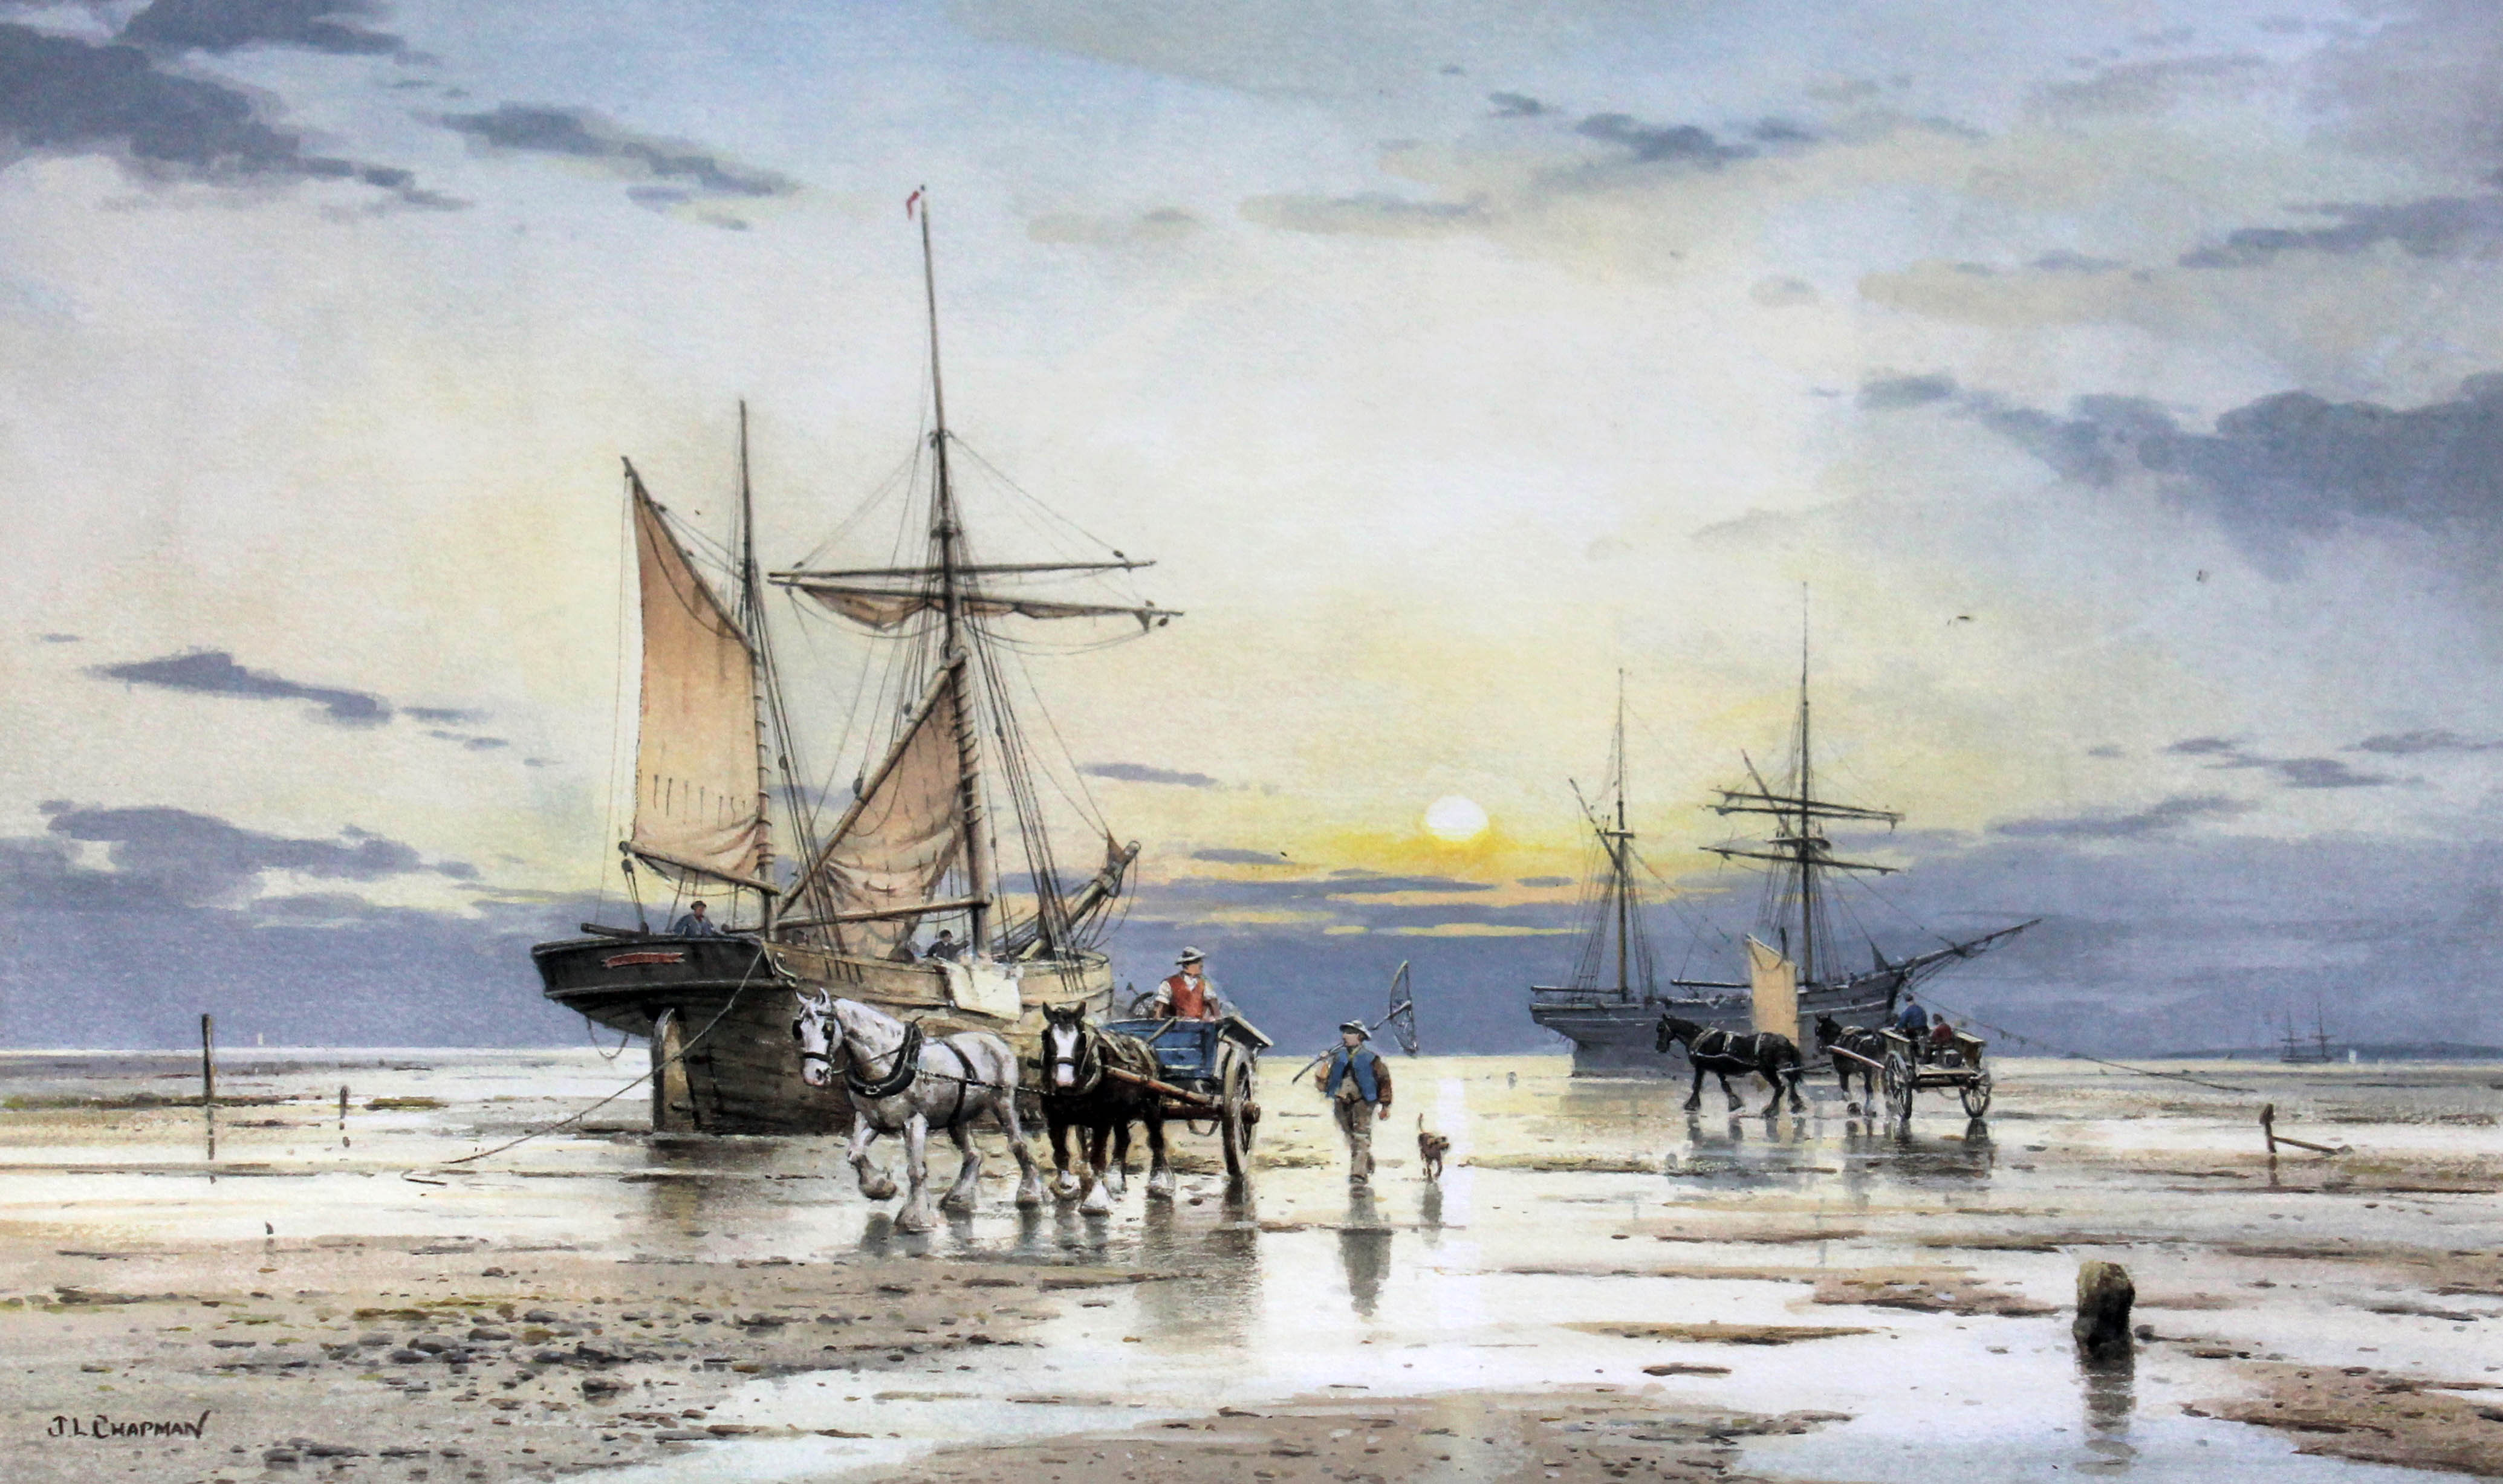 John Lewis Chapman (b1946), fisherman, watercolour, 47cm x 34cm, signed lower left, glazed and